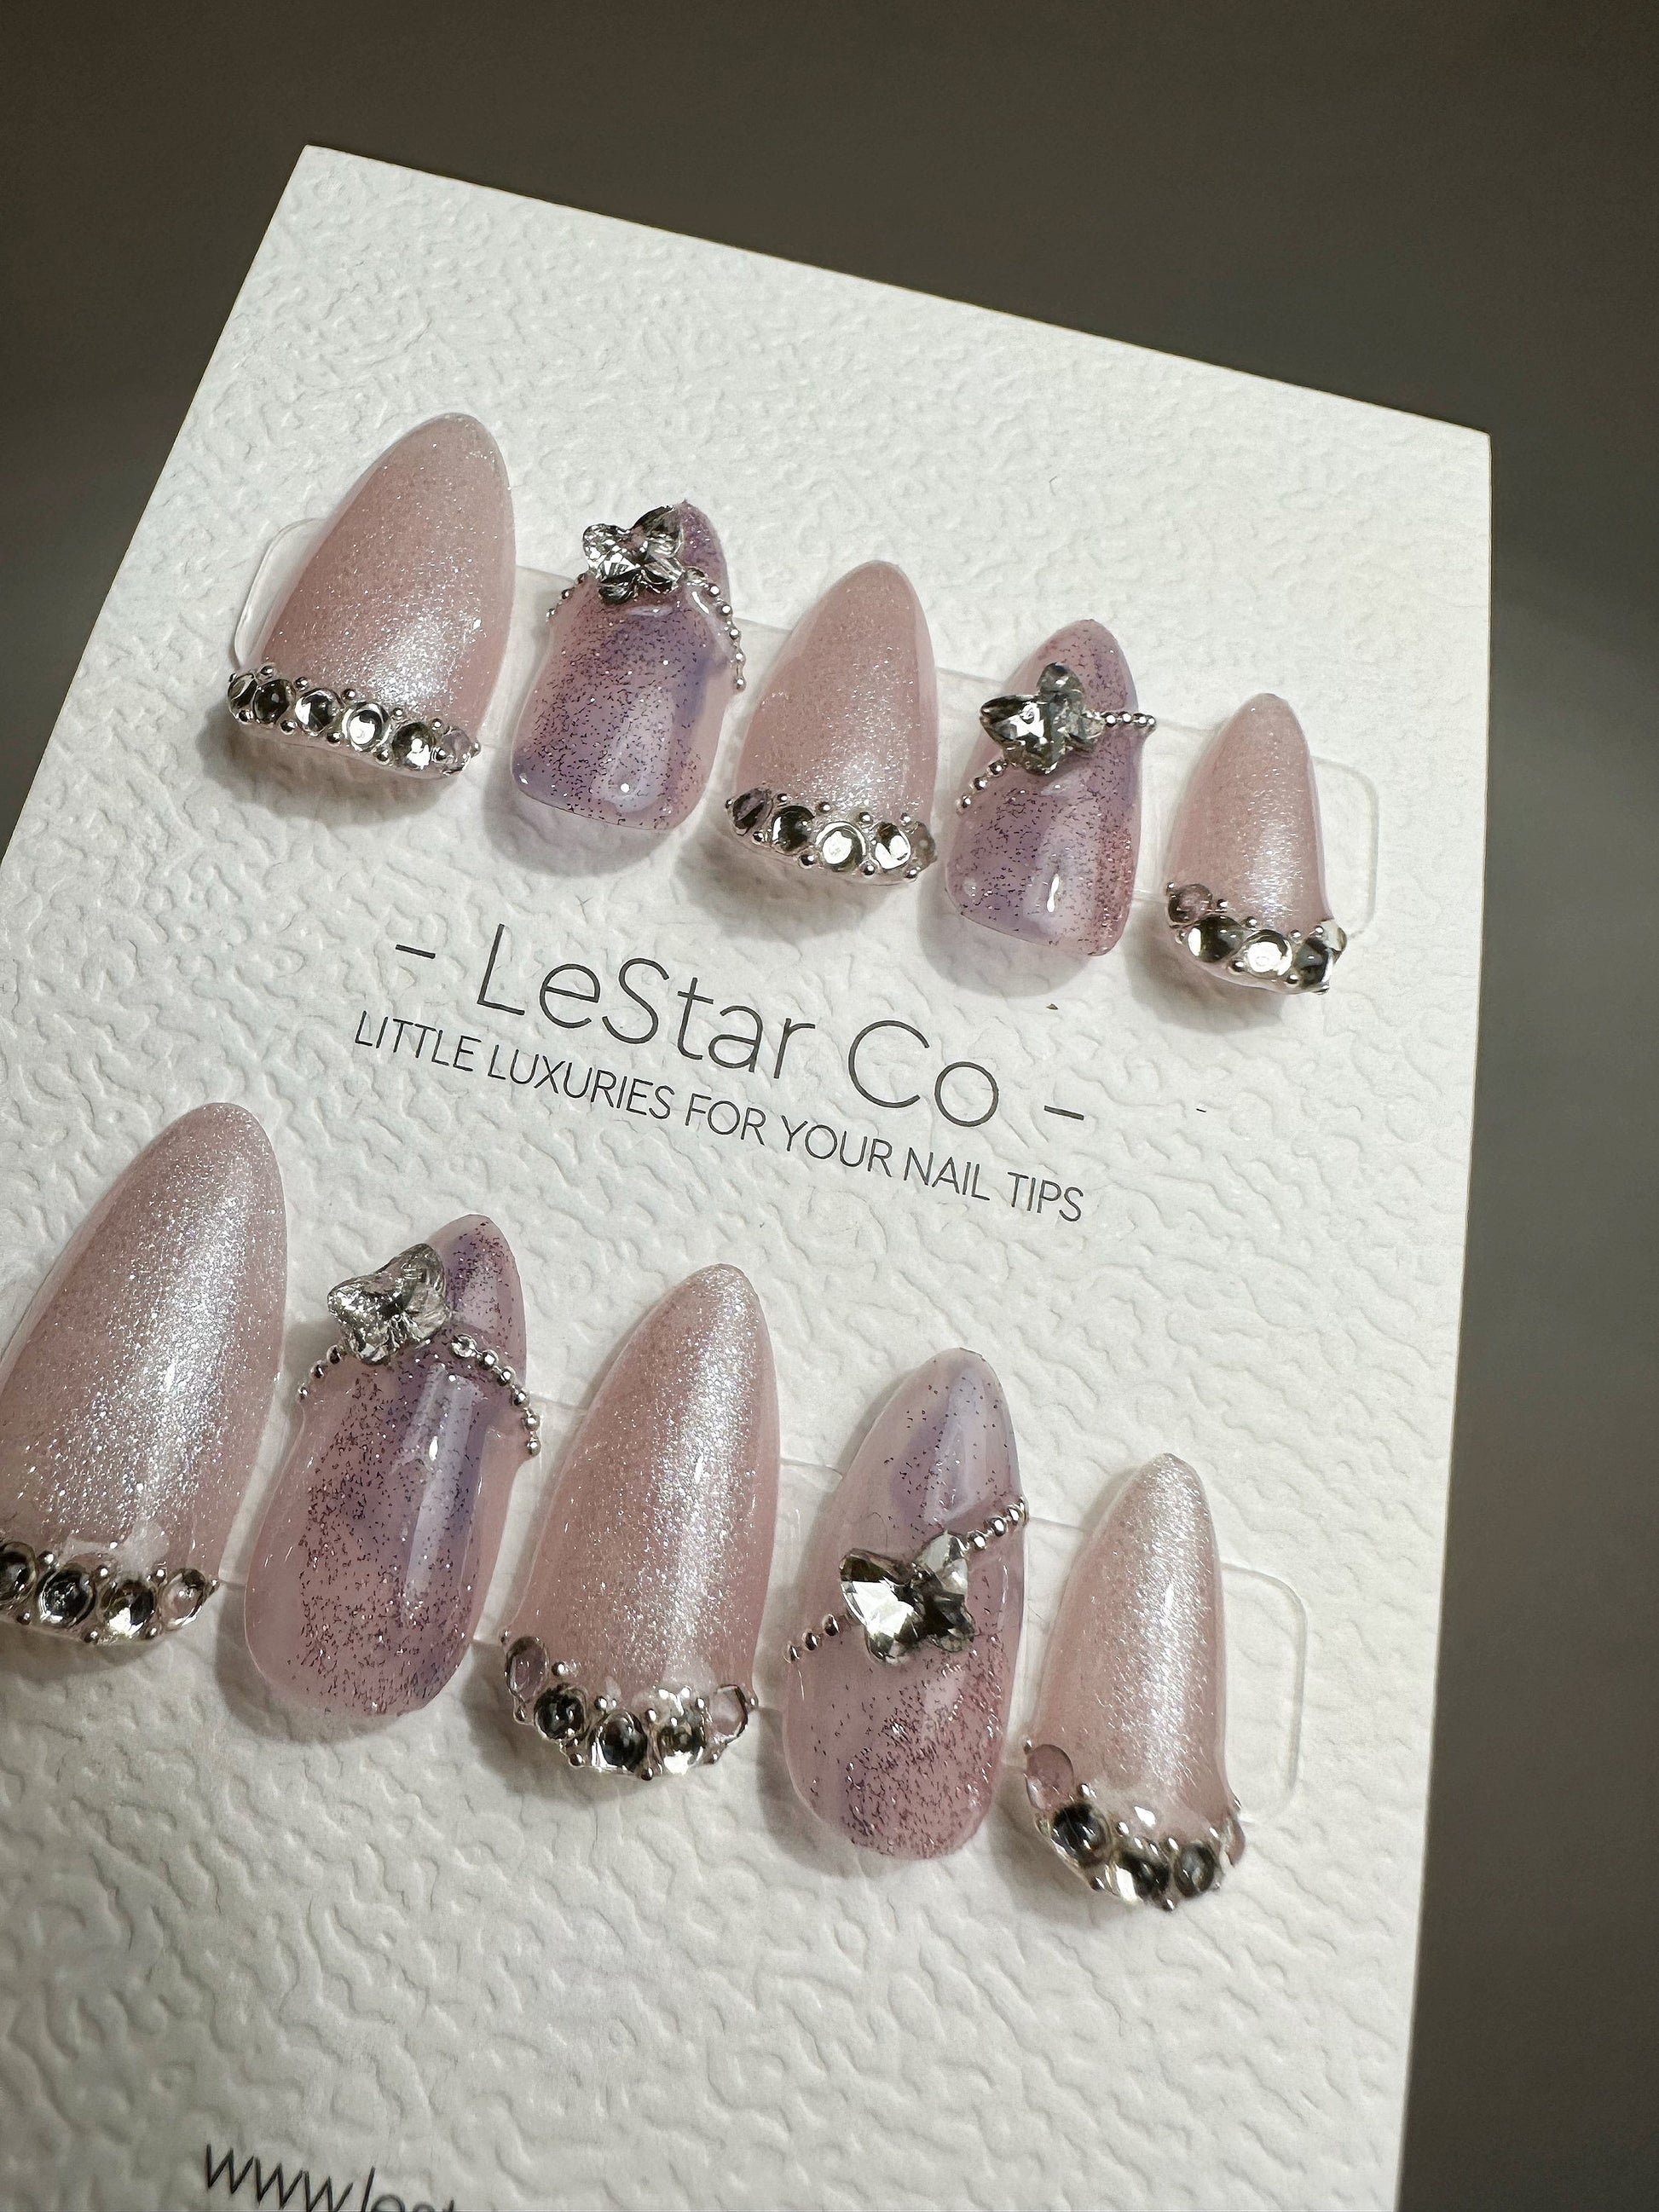 Reusable Perfect Pair Purple Butterfly| Premium Press on Nails Gel | Fake Nails | Cute Fun Colorful Gel Nail Artist faux nails TS388